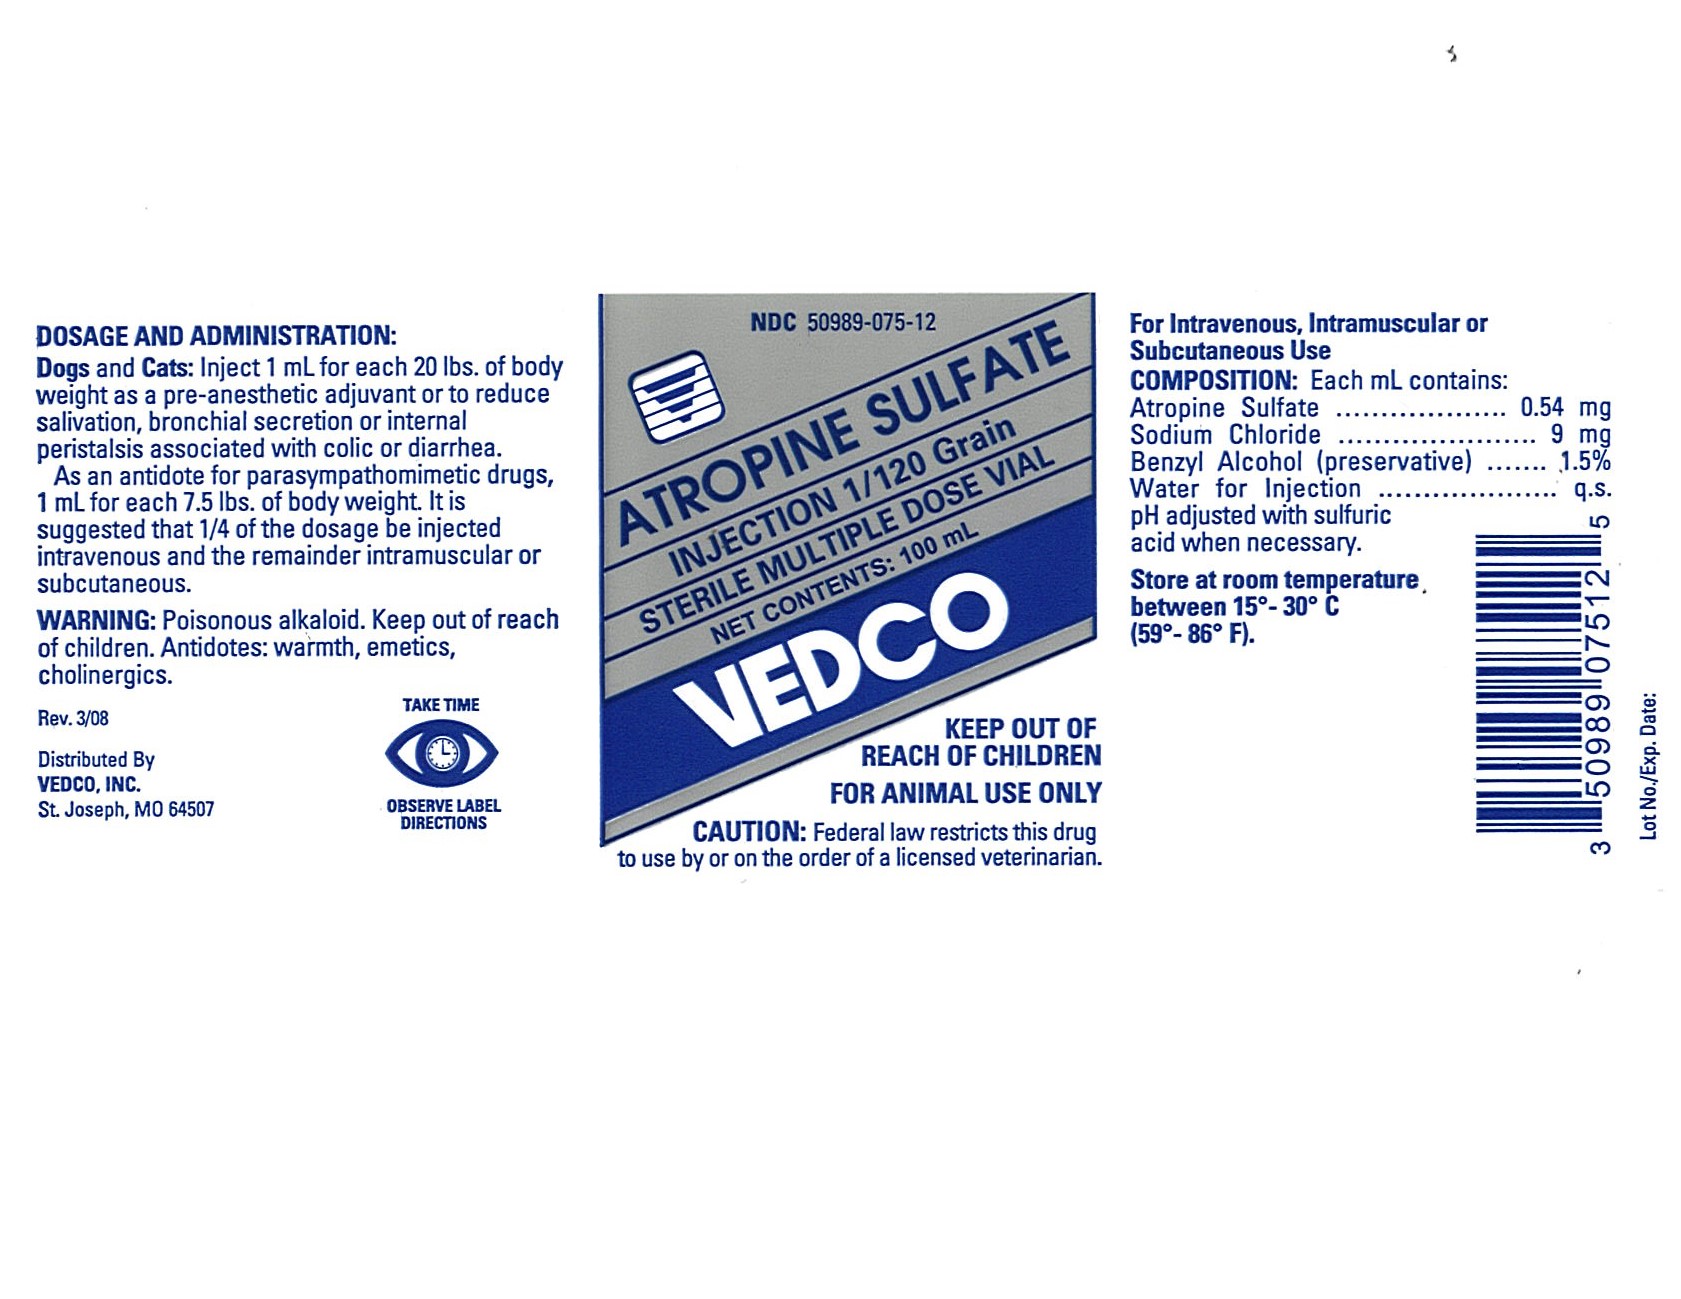 Atropine Sulfate Inj VEDCO label